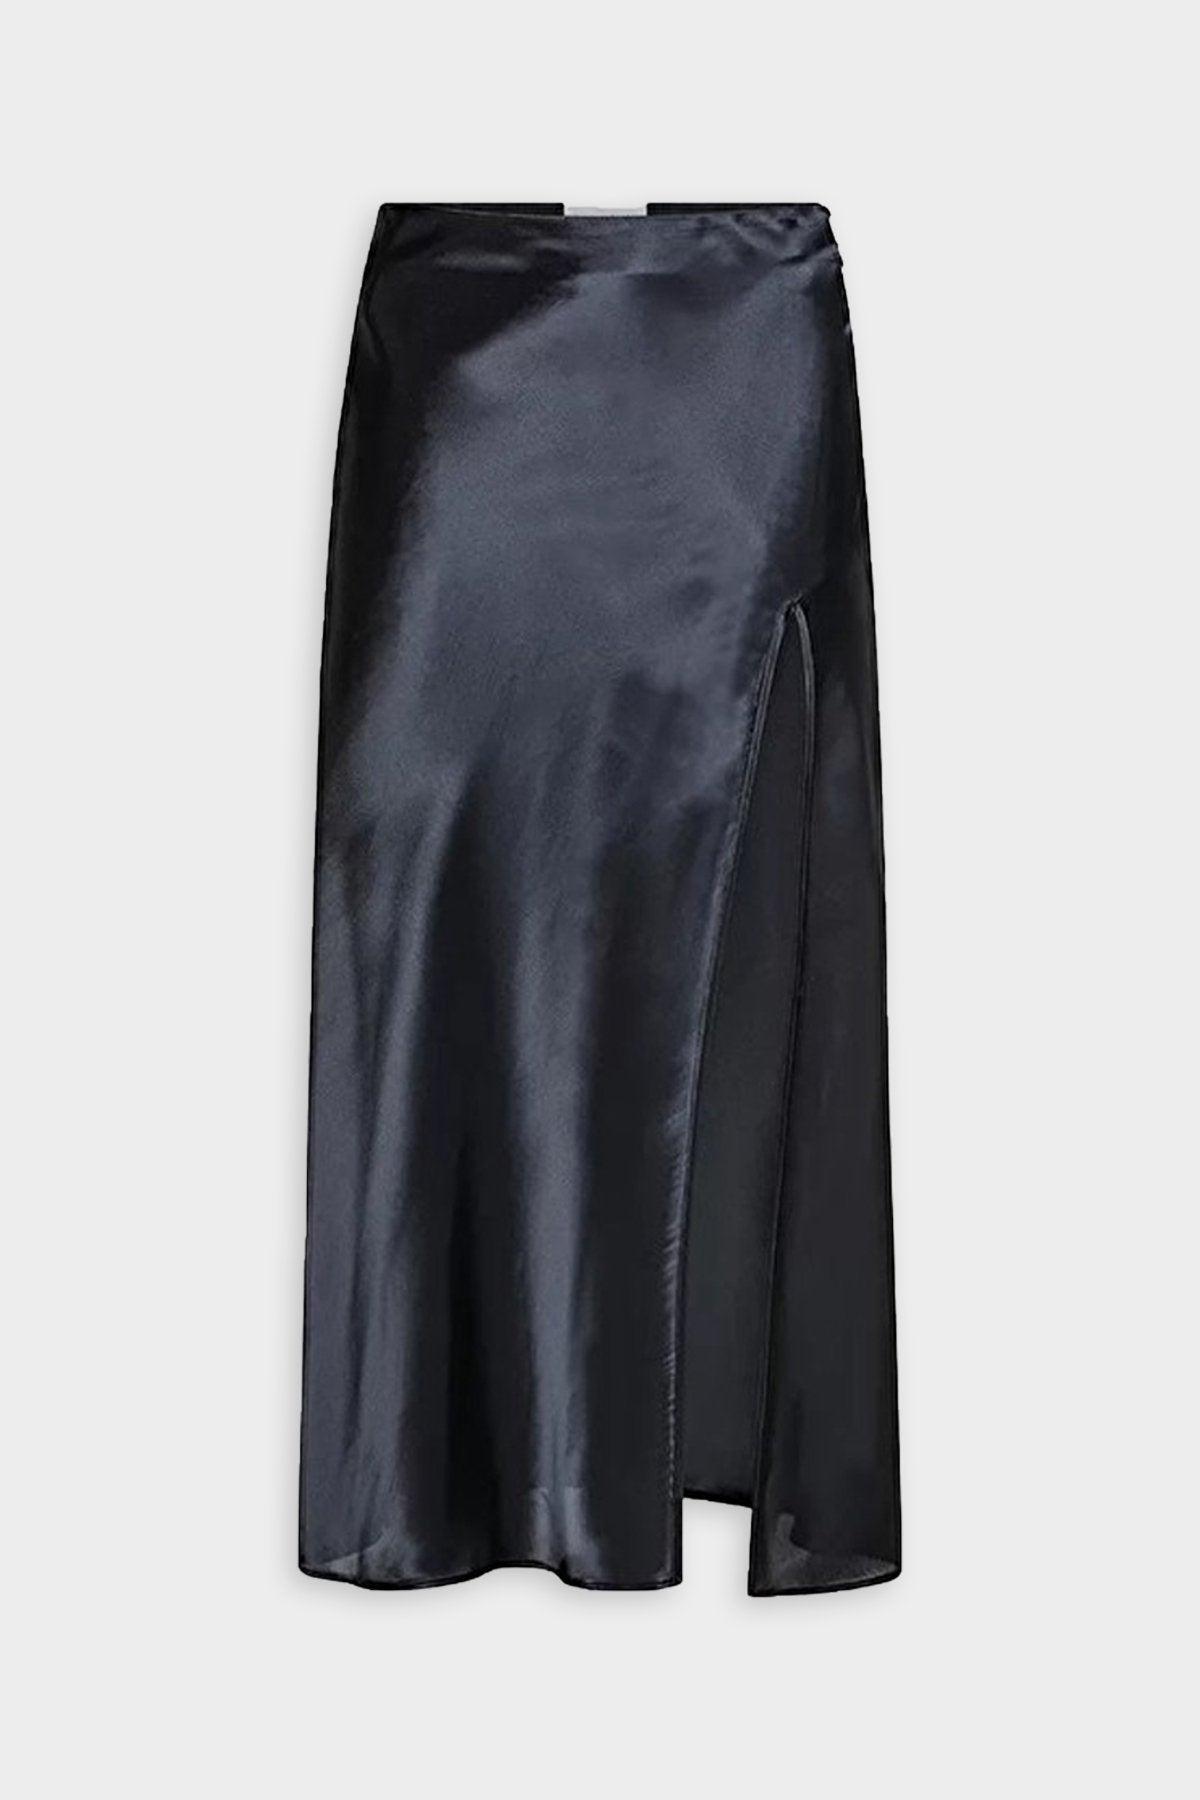 Shining Satin Pencil Skirt in Black - shop-olivia.com